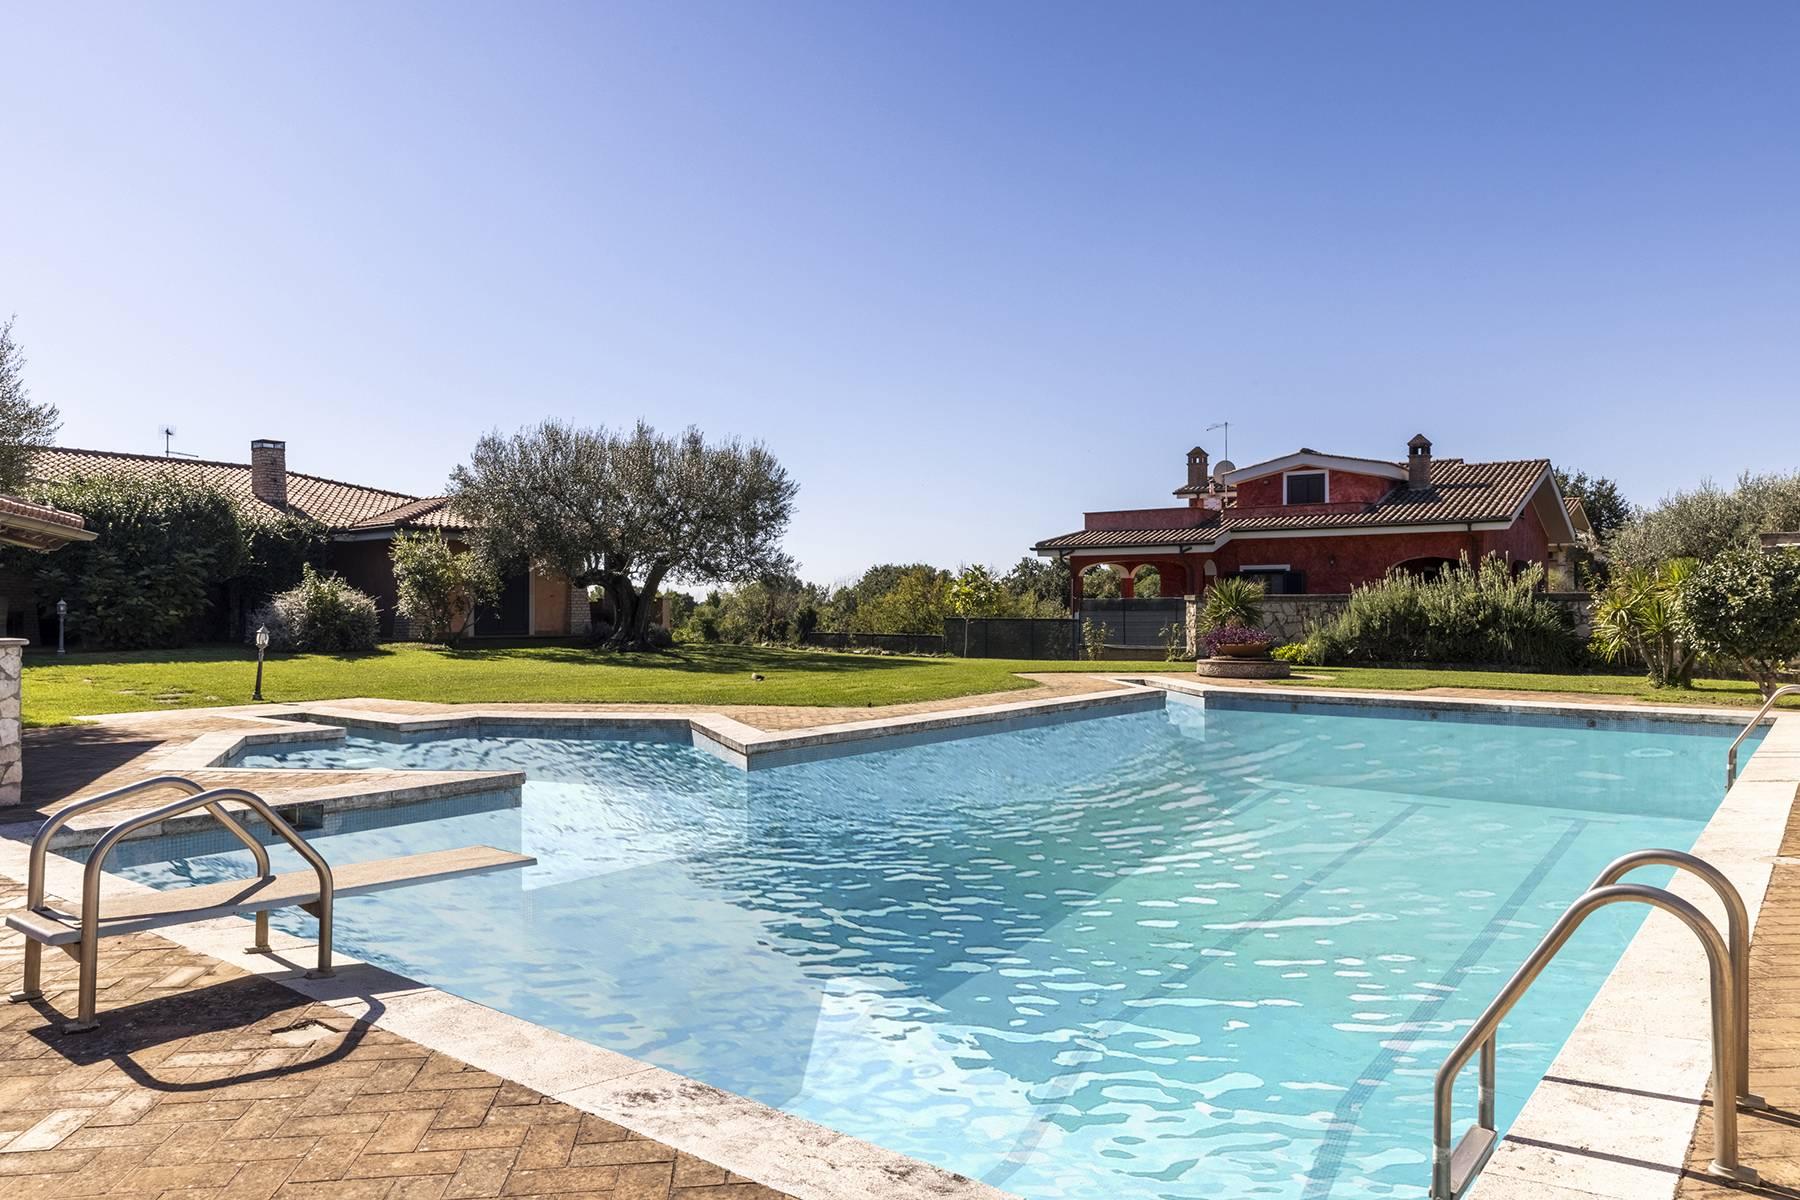 Moderna villa con piscina a due passi da Roma - 2